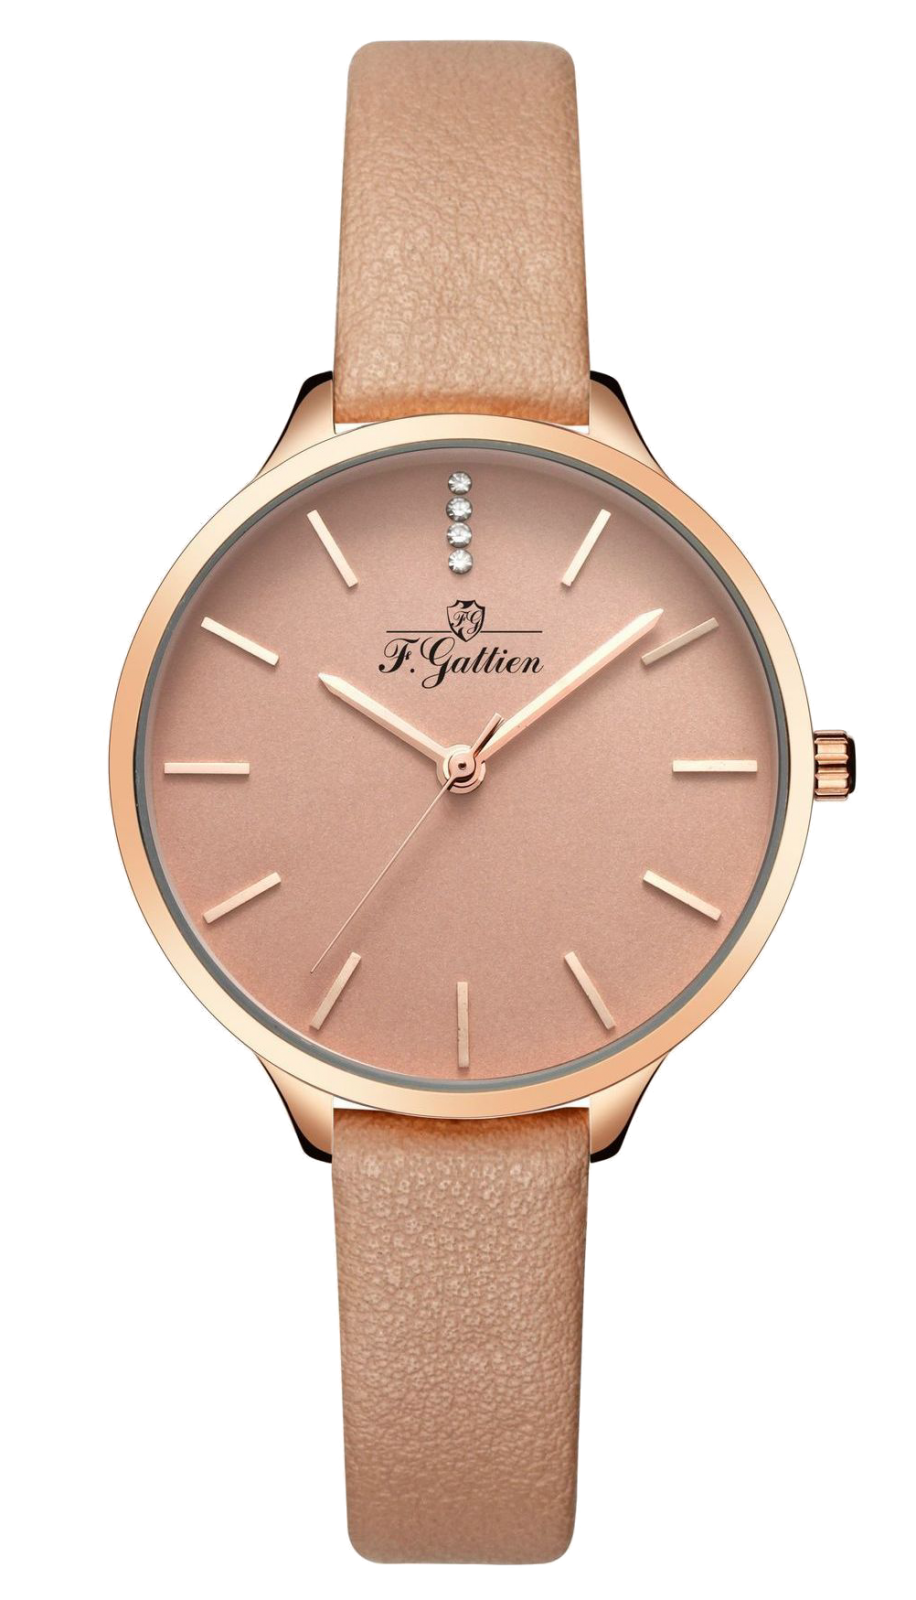 Женские часы F.Gattien F.Gattien 6603-412беж